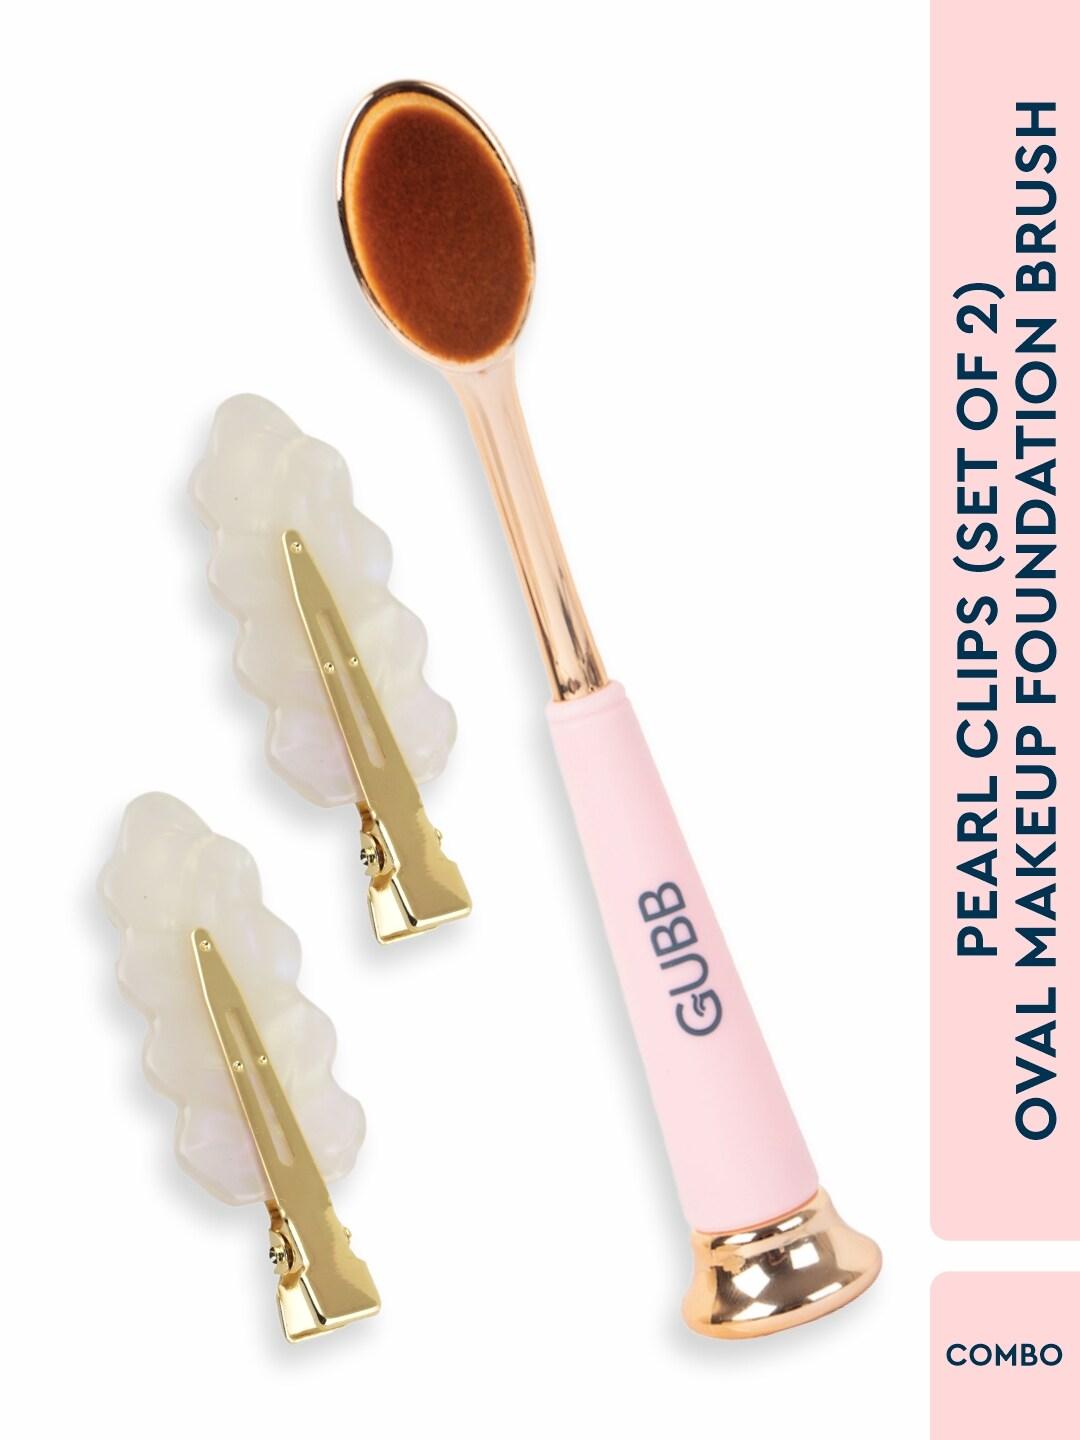 GUBB Set Of 2 Oval Makeup Foundation Brush + Gubb Pearl Clips